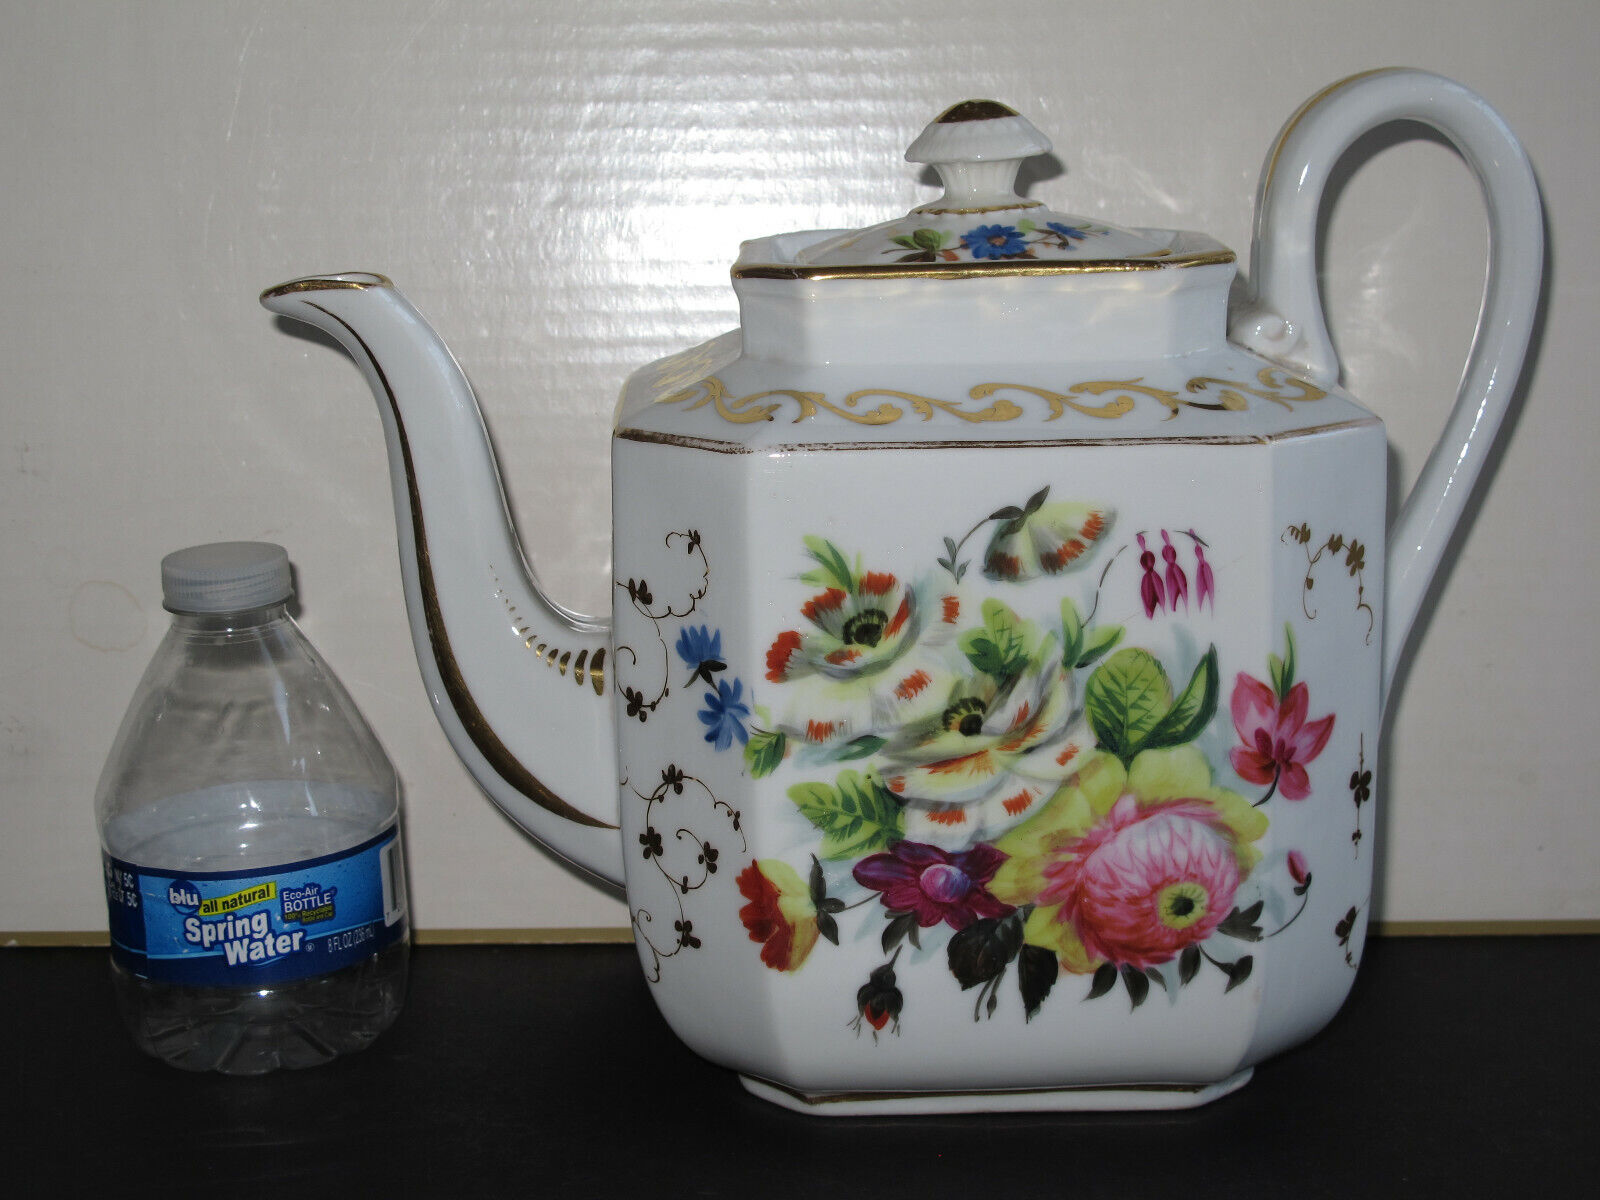 LARGE Magnificent Antique Teapot Hand-painted Flowers w/ Heavy Gold - EX++, RARE